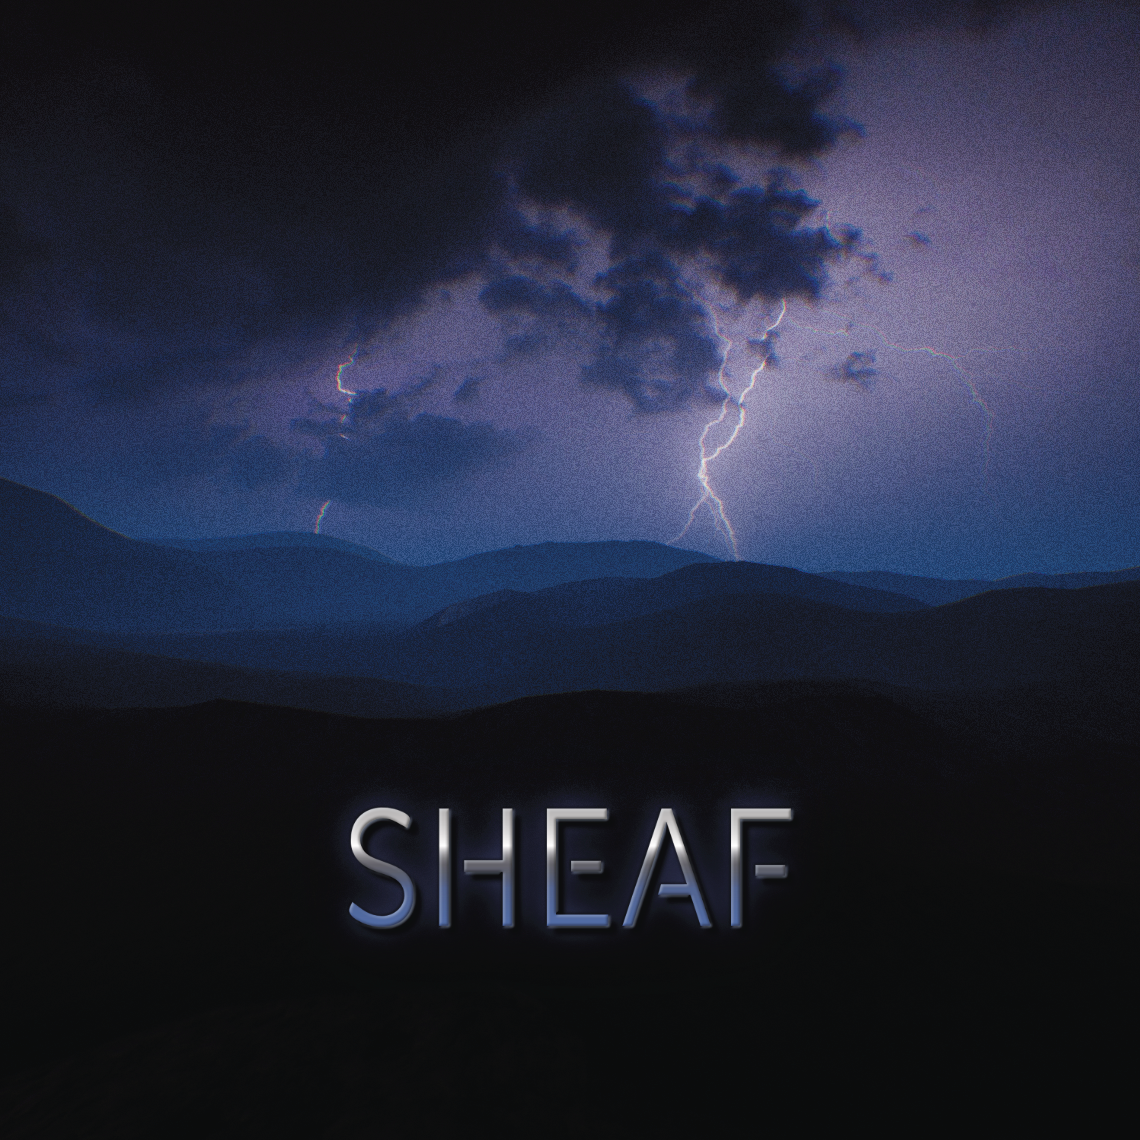 www.sheafmusic.com